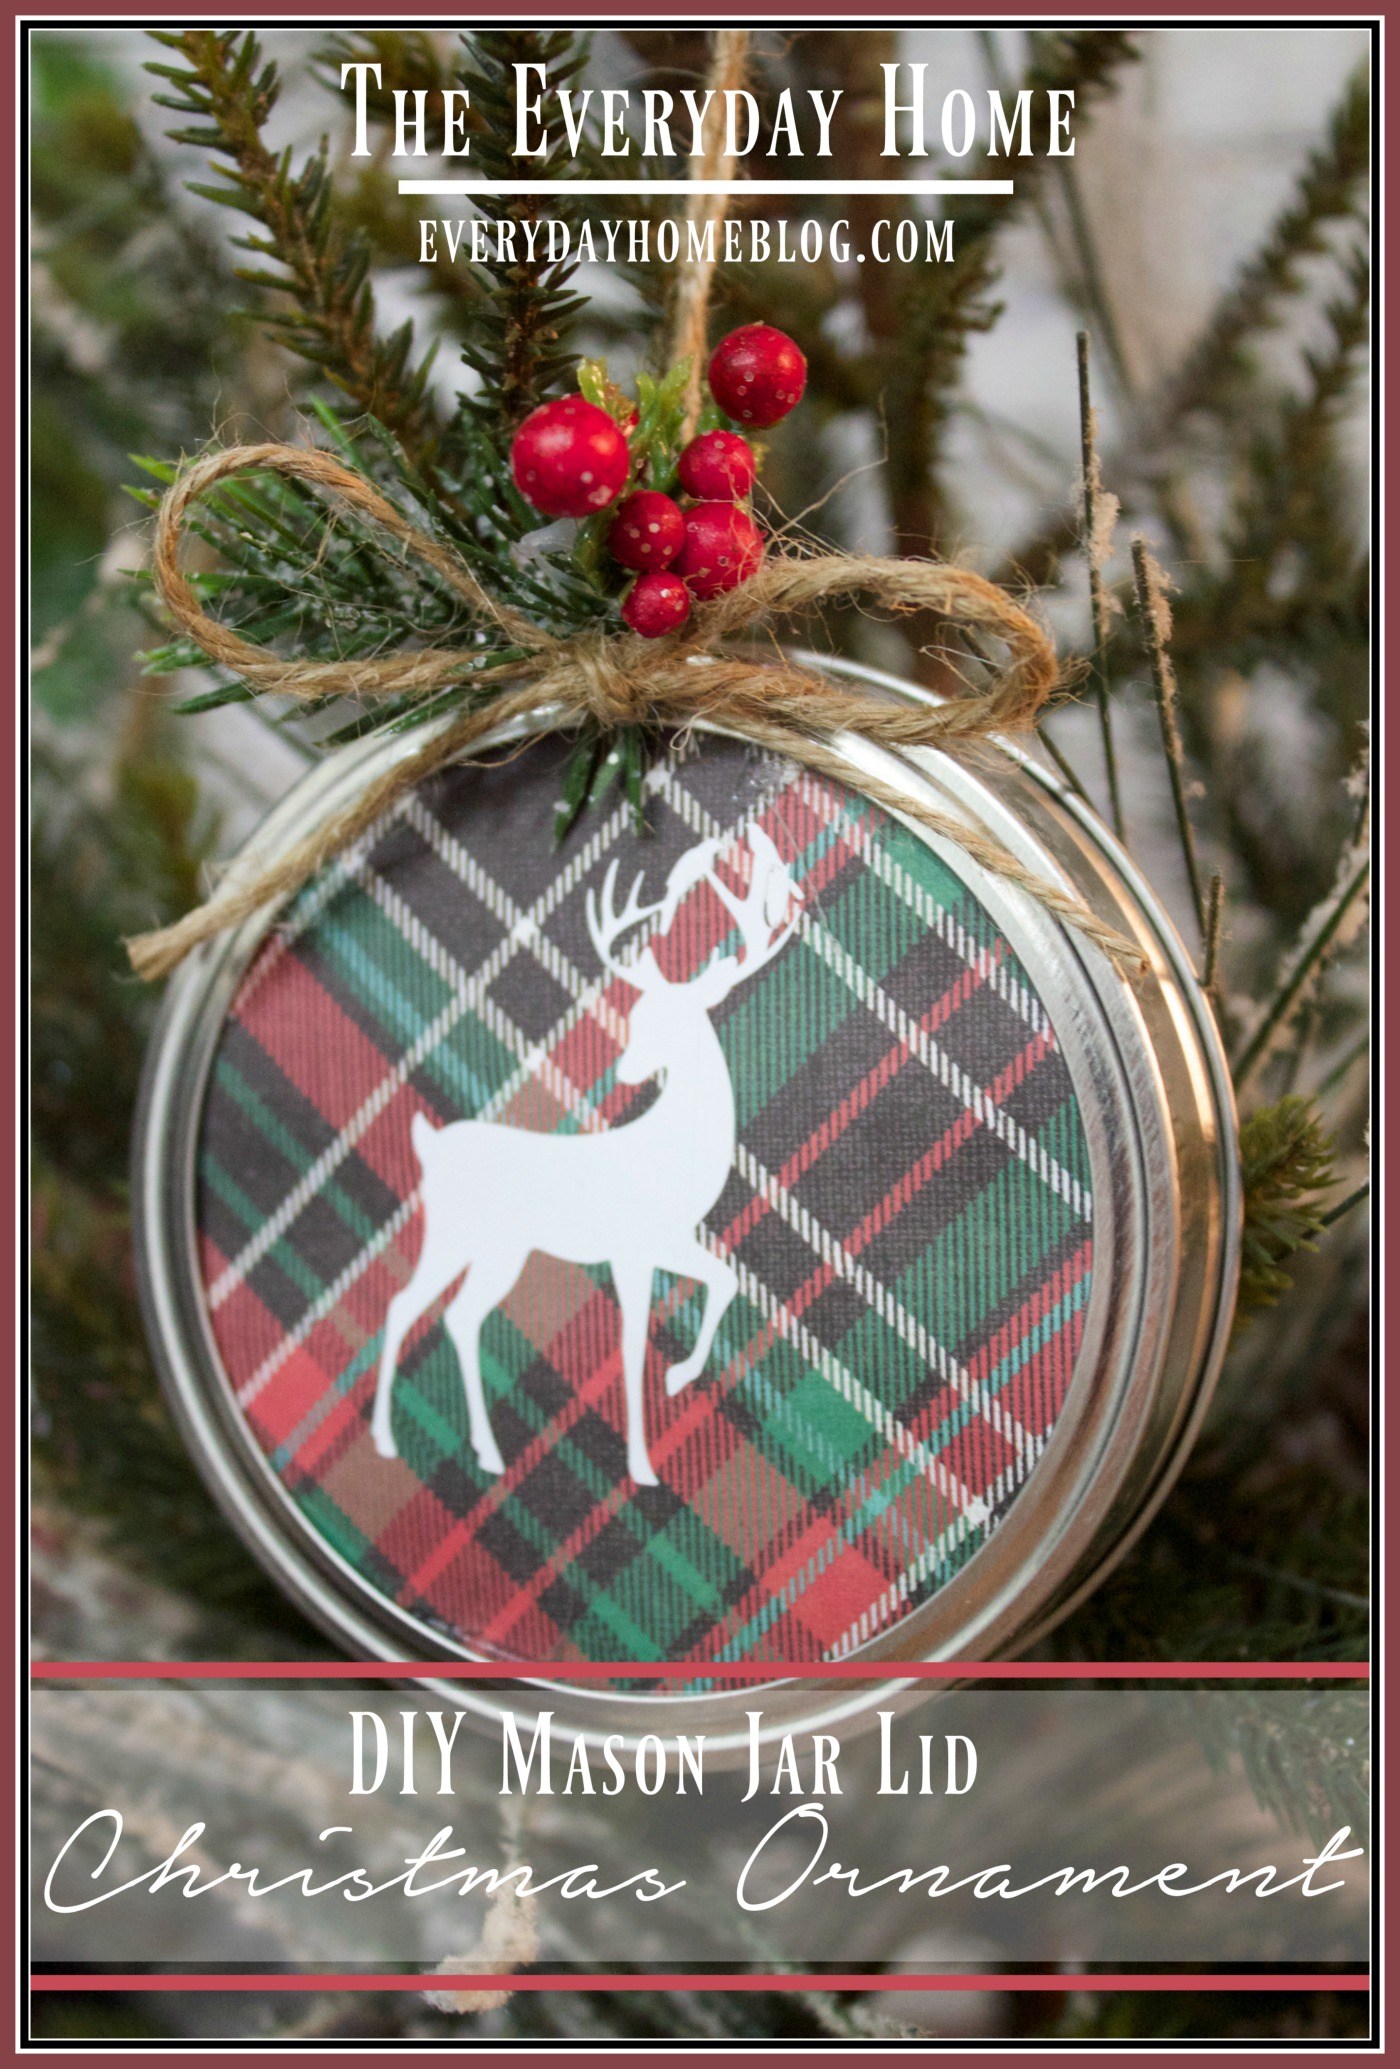 25 Mason Jar Christmas Ornaments | Yesterday On Tuesday